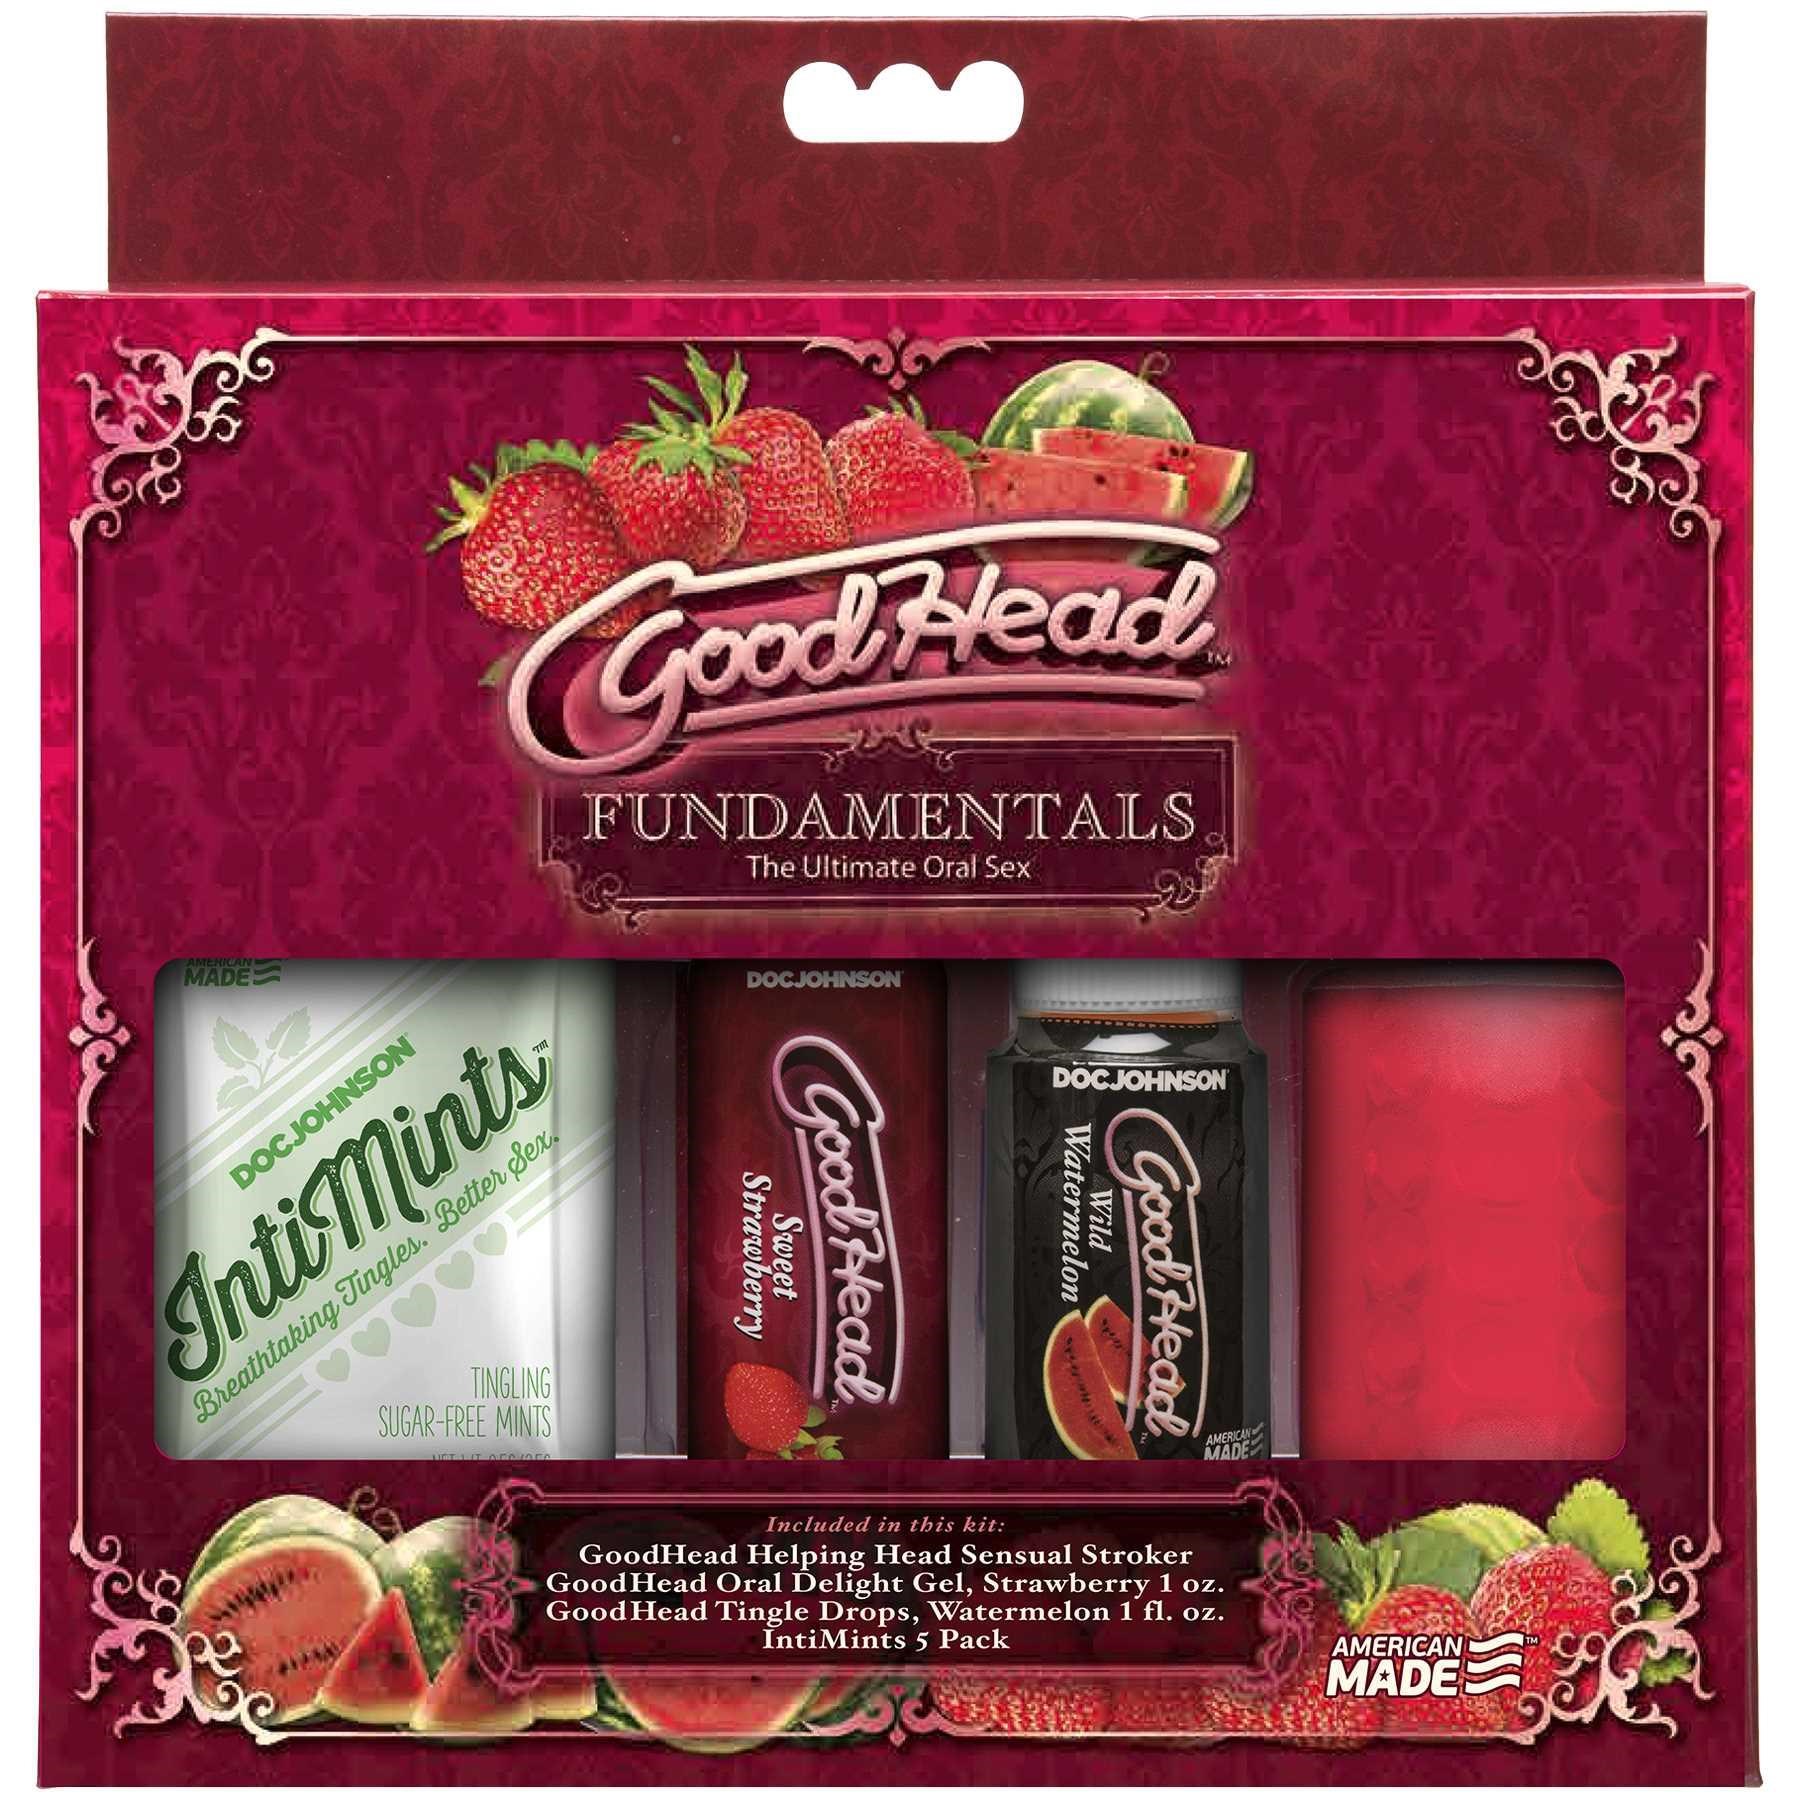 Goodhead Fundamentals Oral Sex front on box